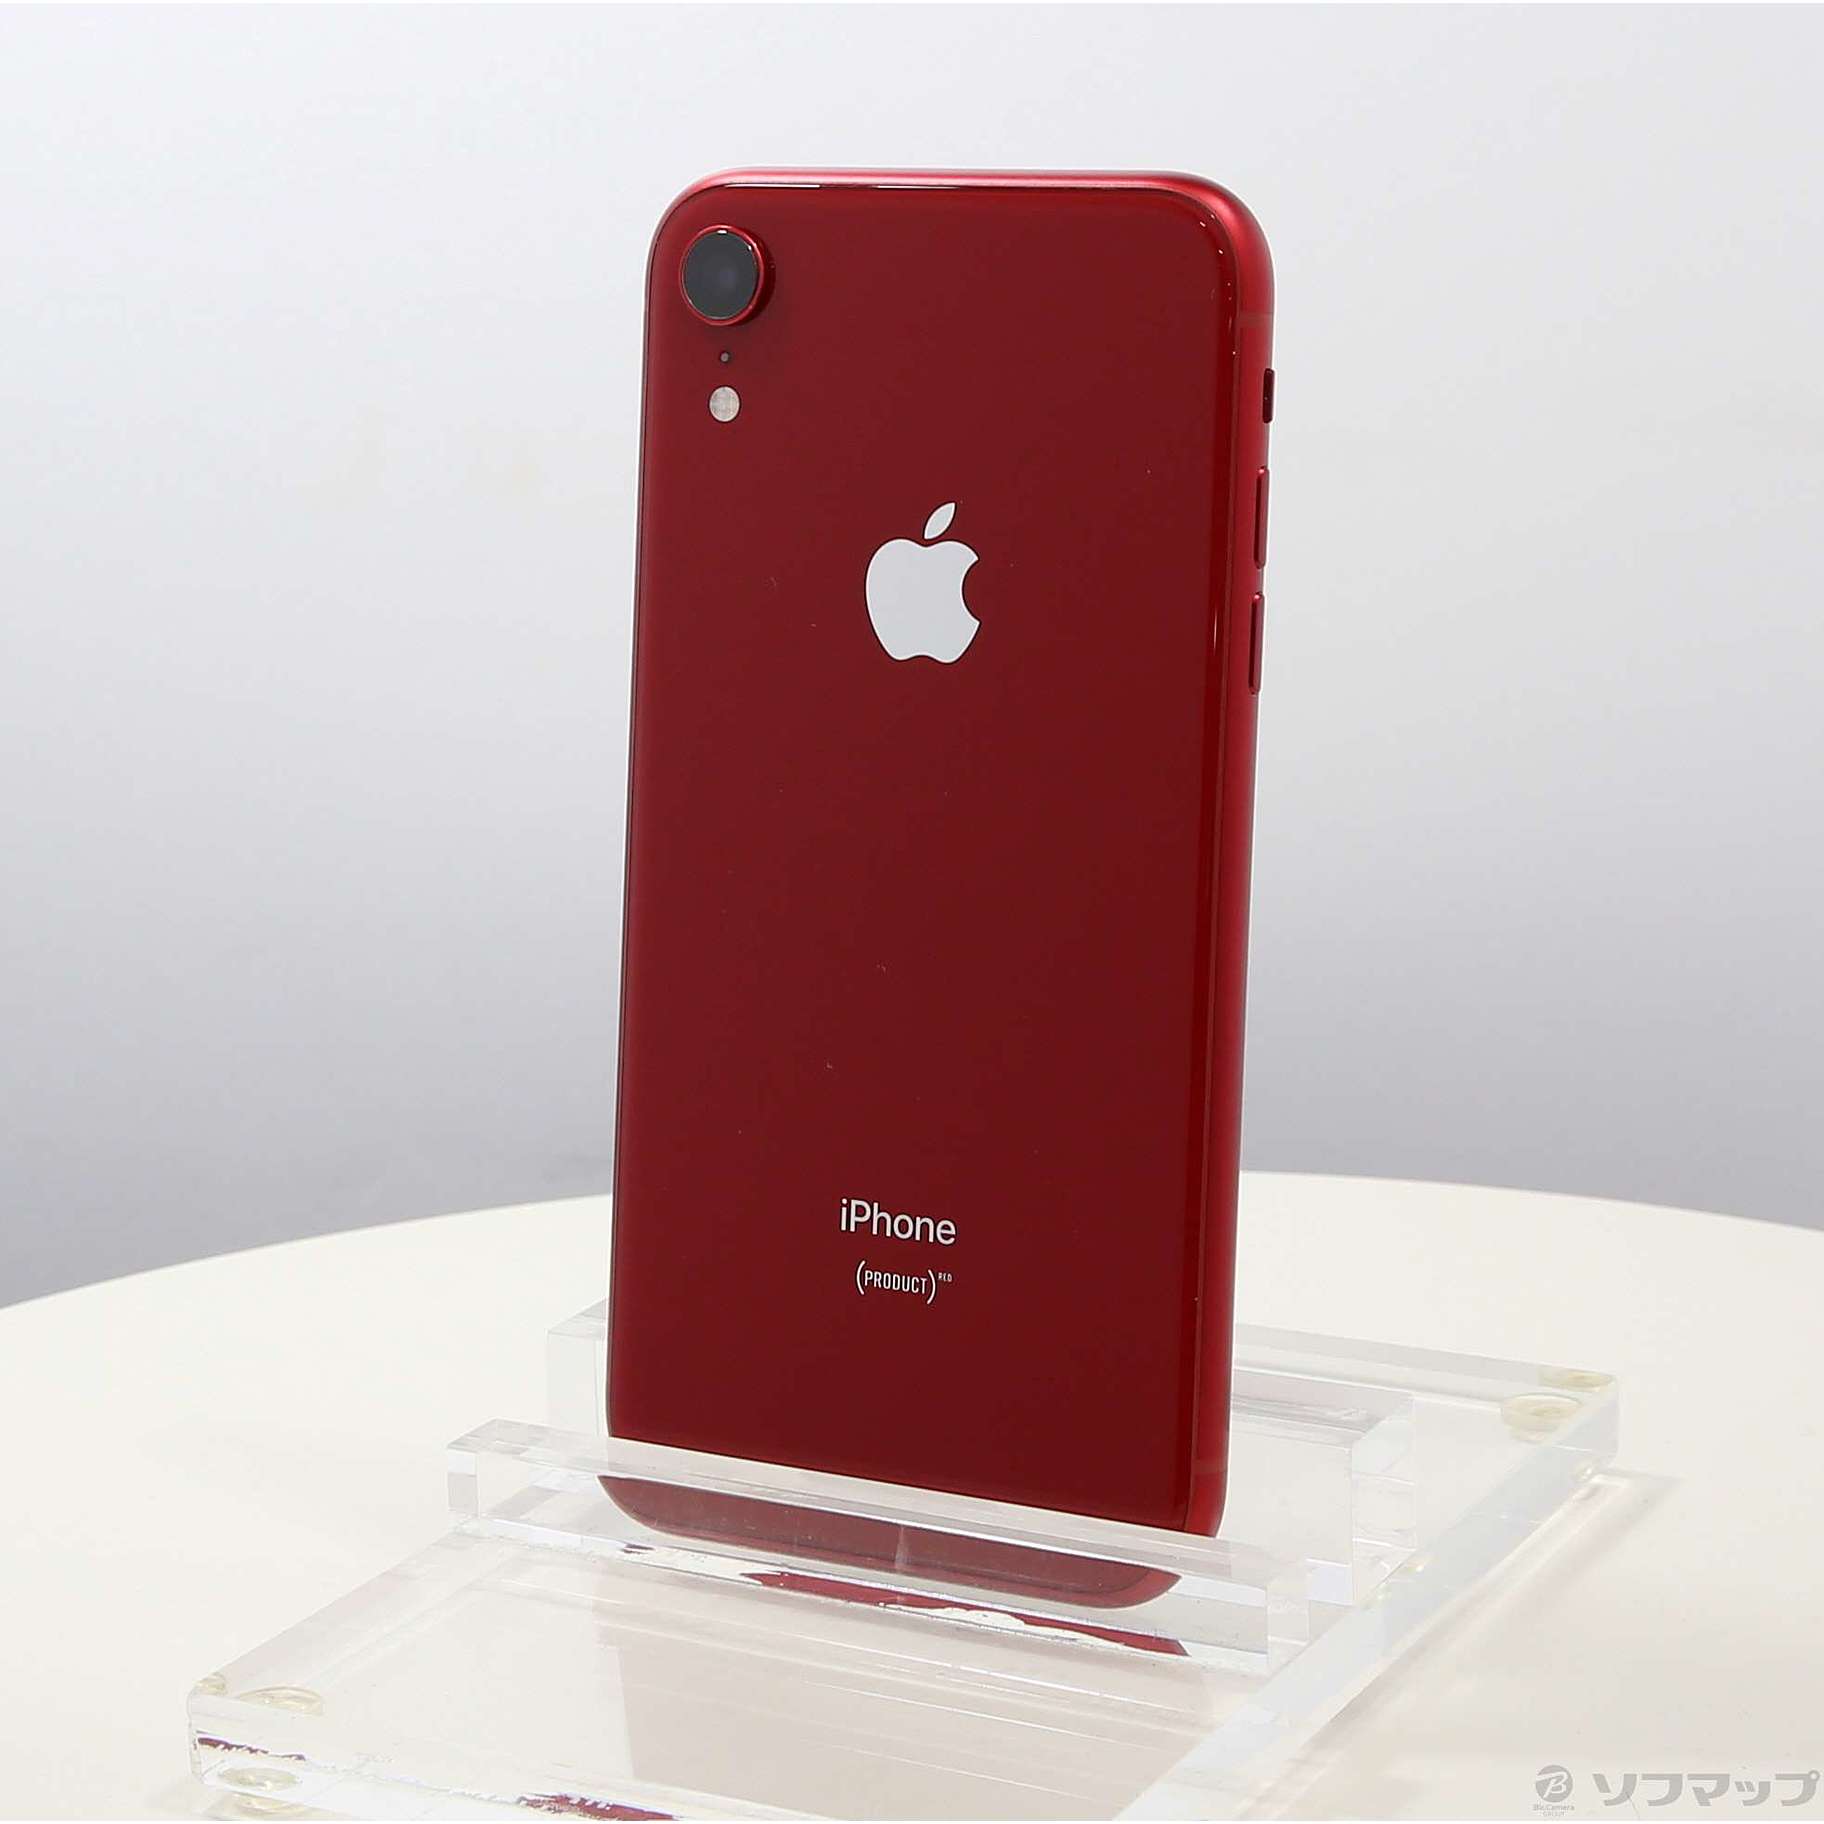 iPhone XR (PRODUCT)RED 64GB SIMフリー [レッド] 中古(白ロム)価格 ...